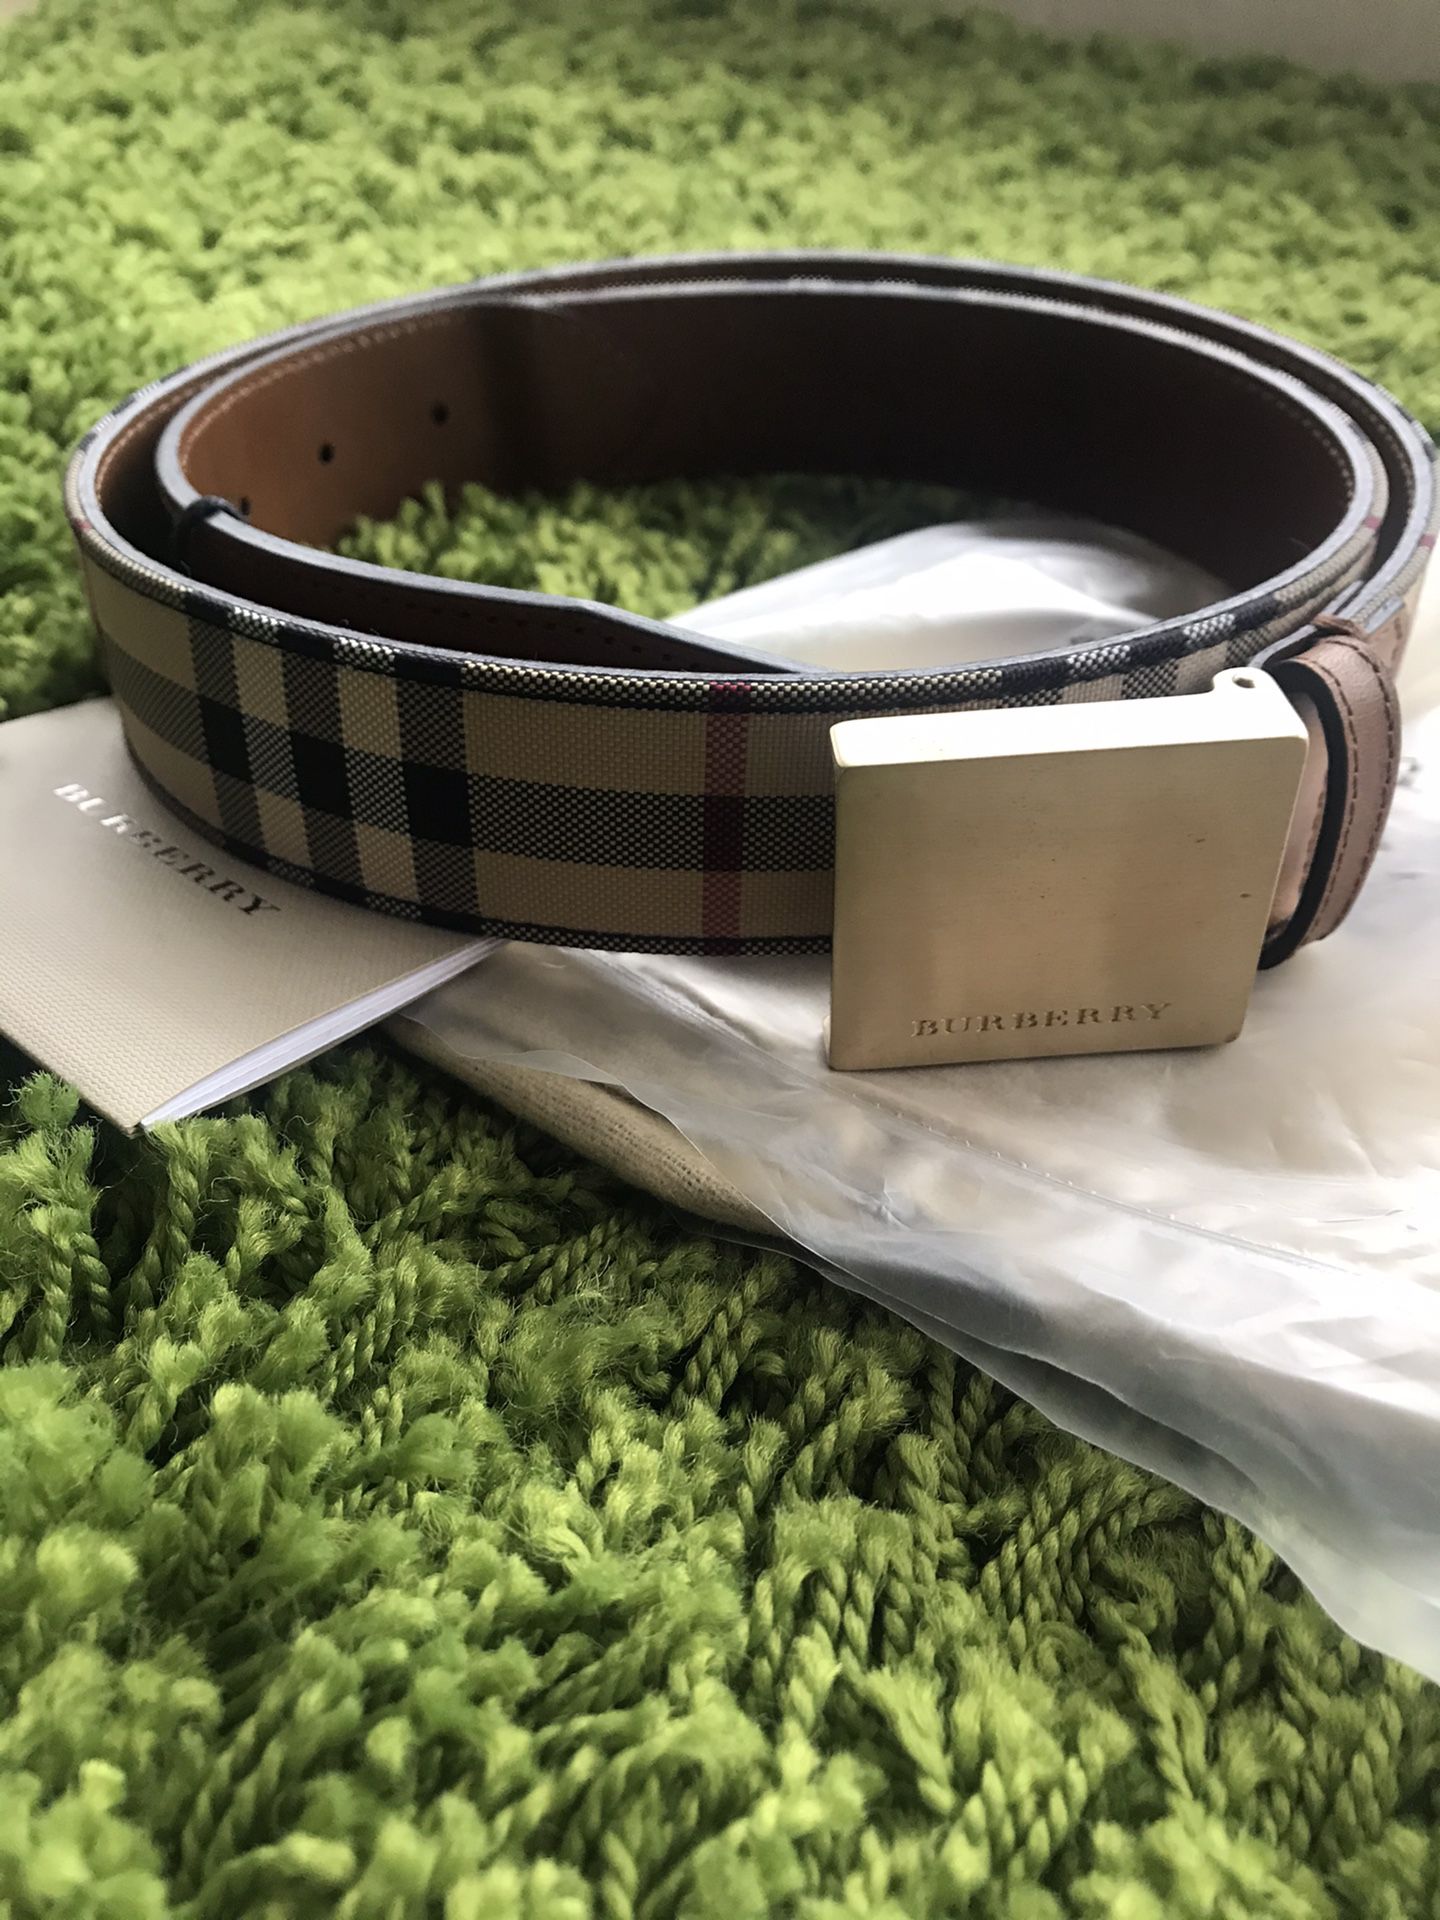 Burberry belt 100% authentic